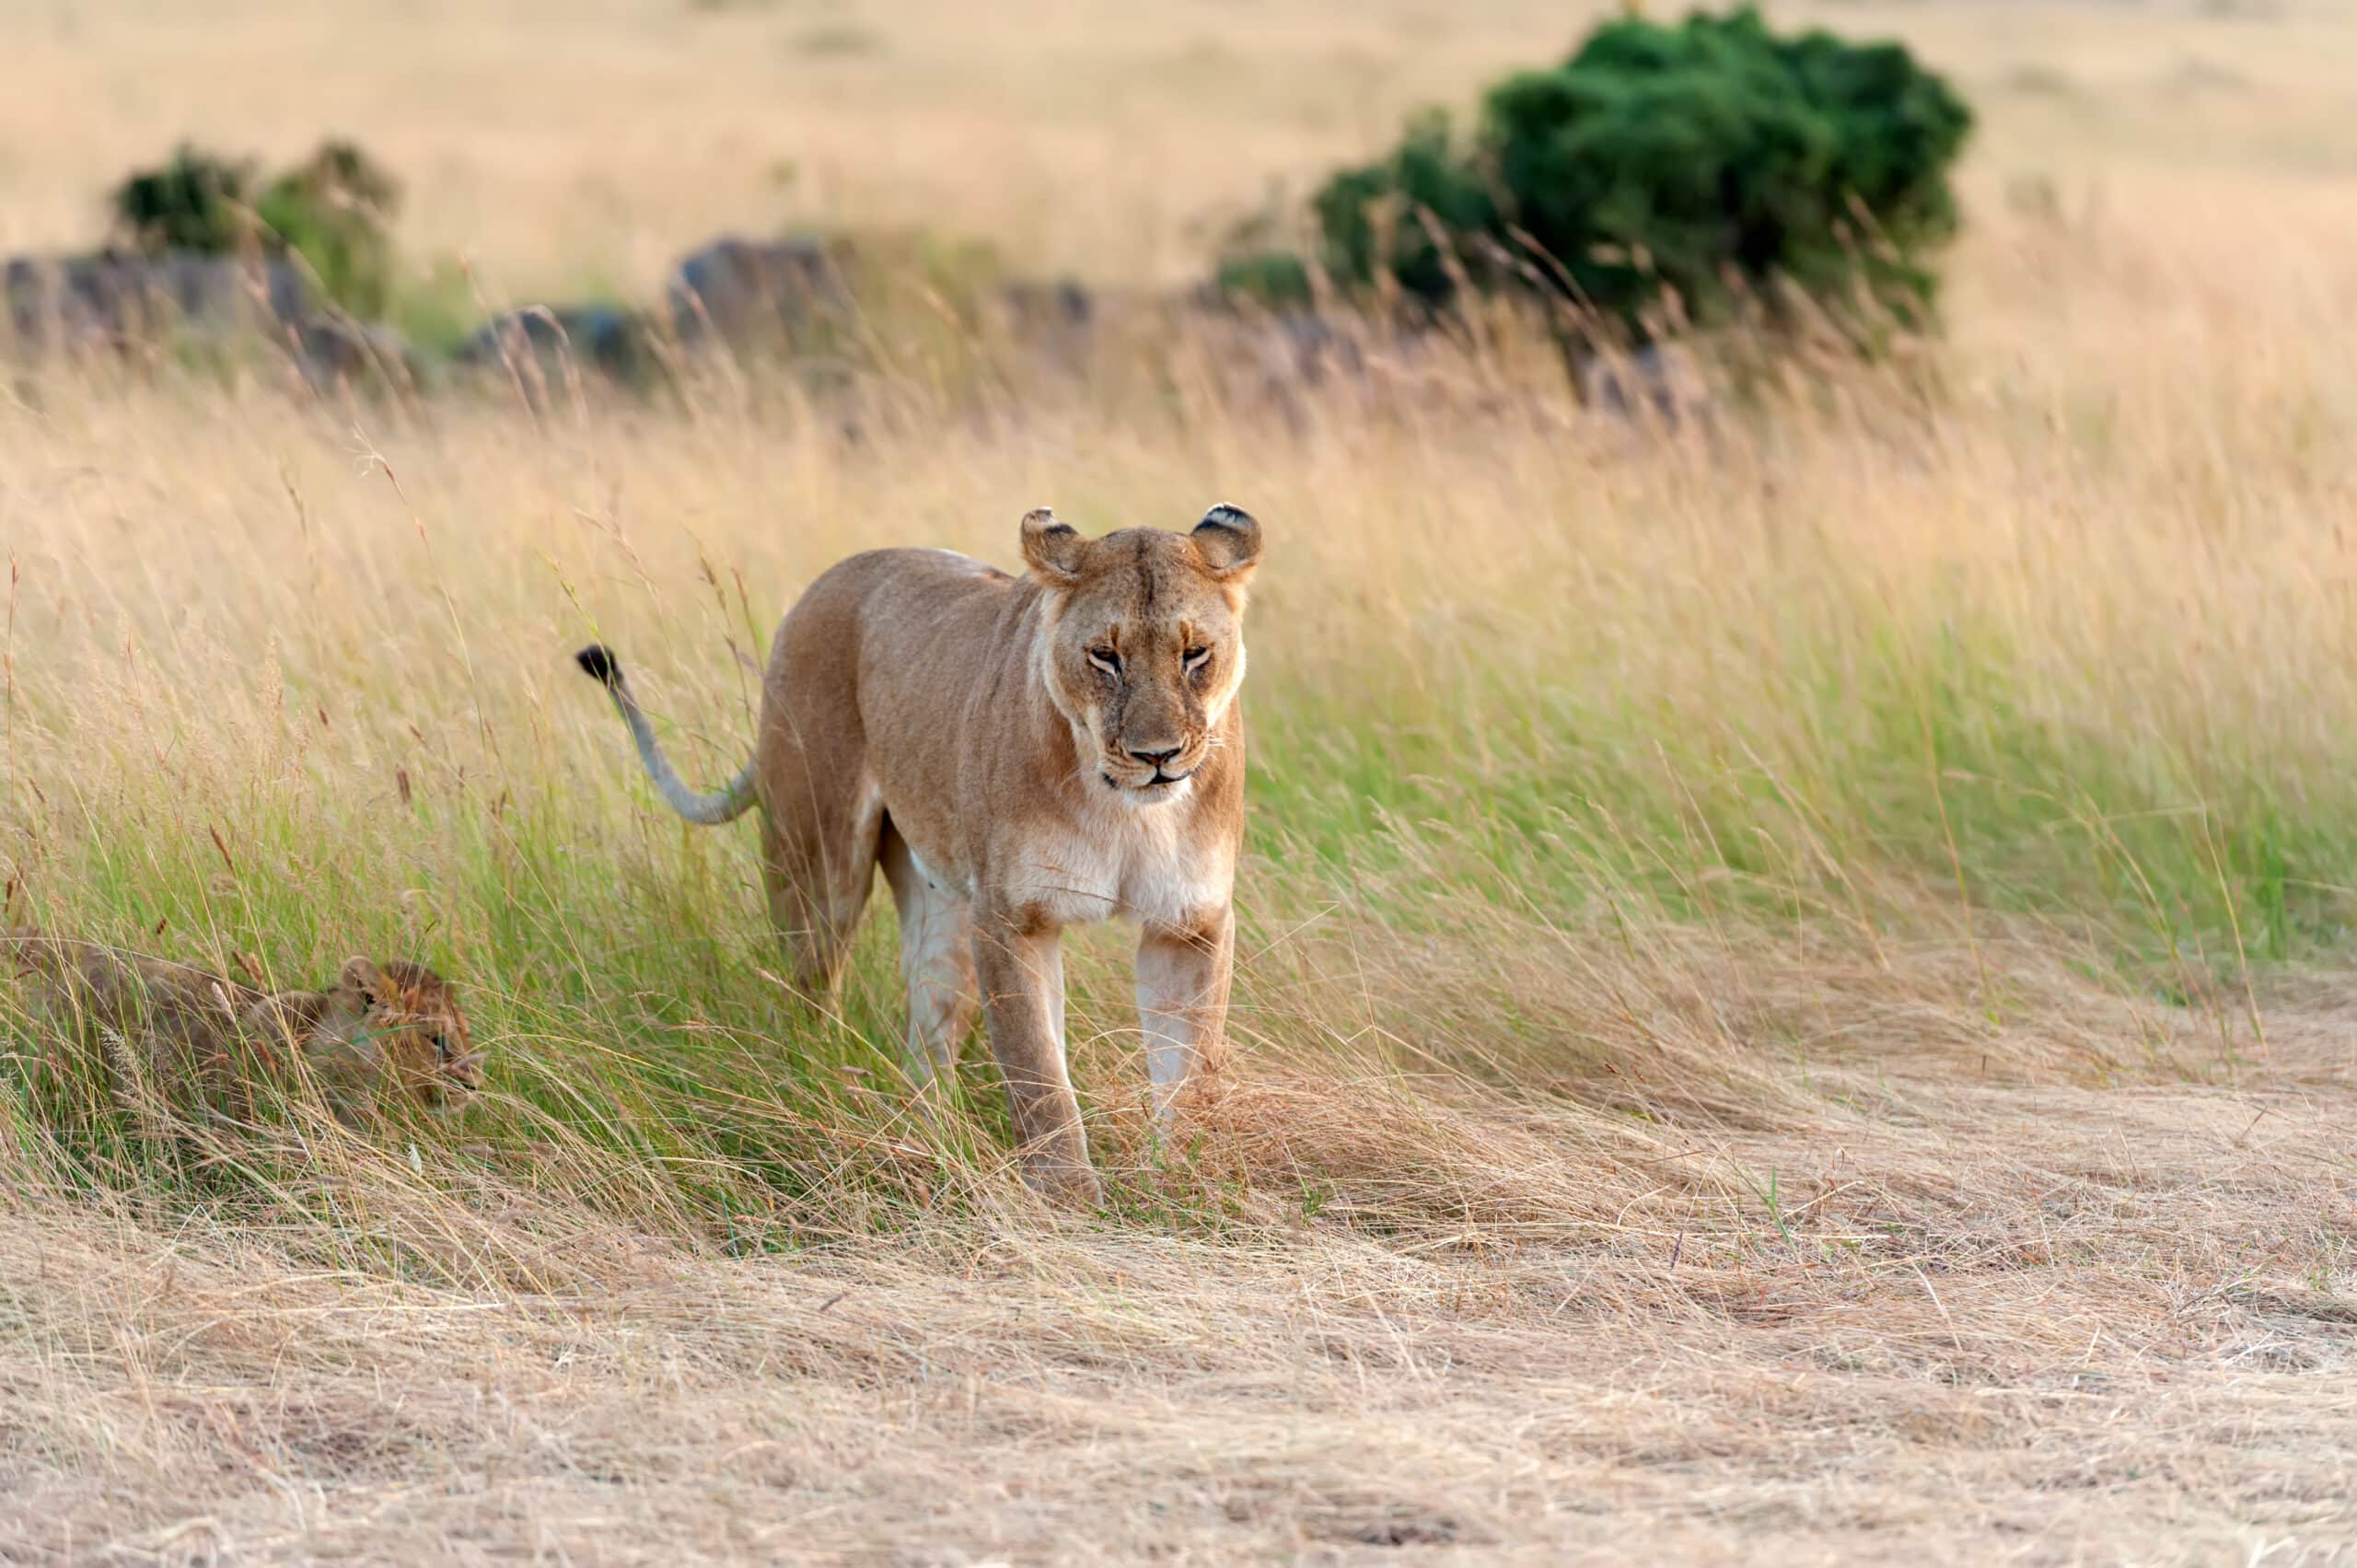 lion in national park of kenya 2021 08 26 15 56 04 utc scaled